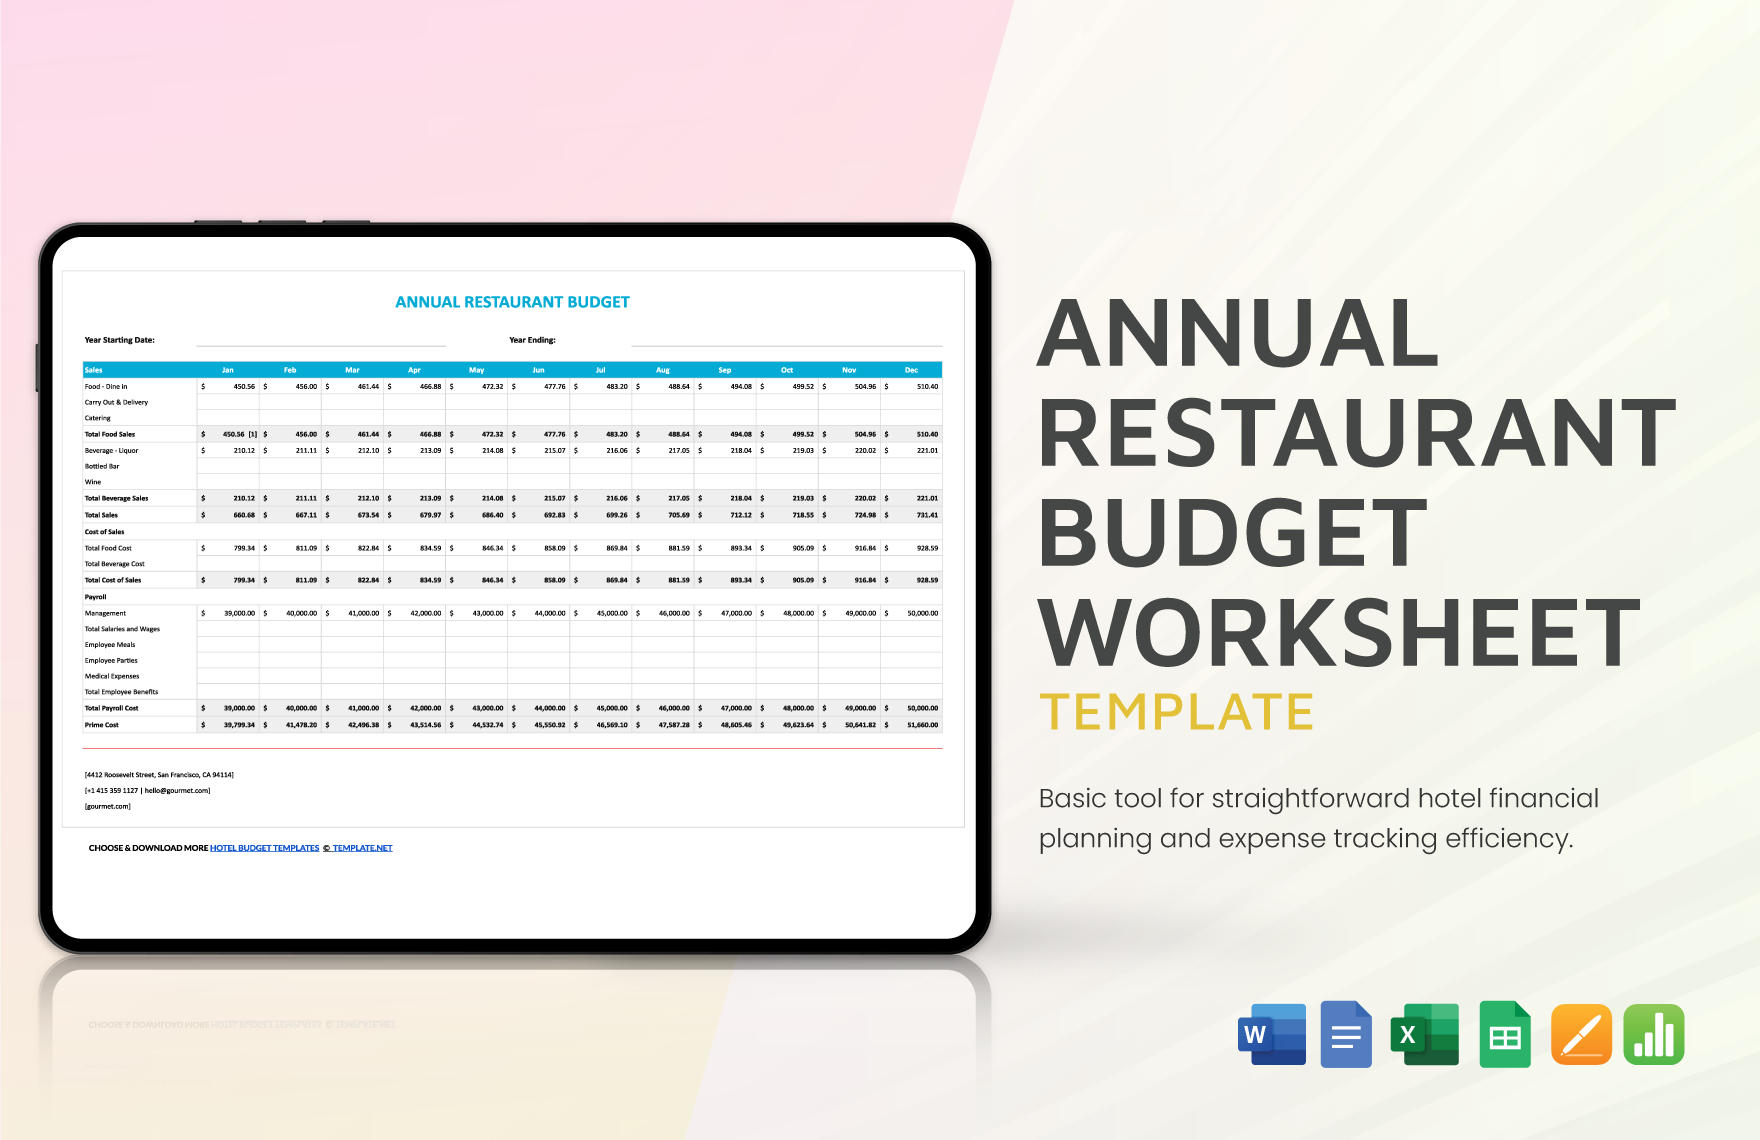 Annual Restaurant Budget Worksheet Template